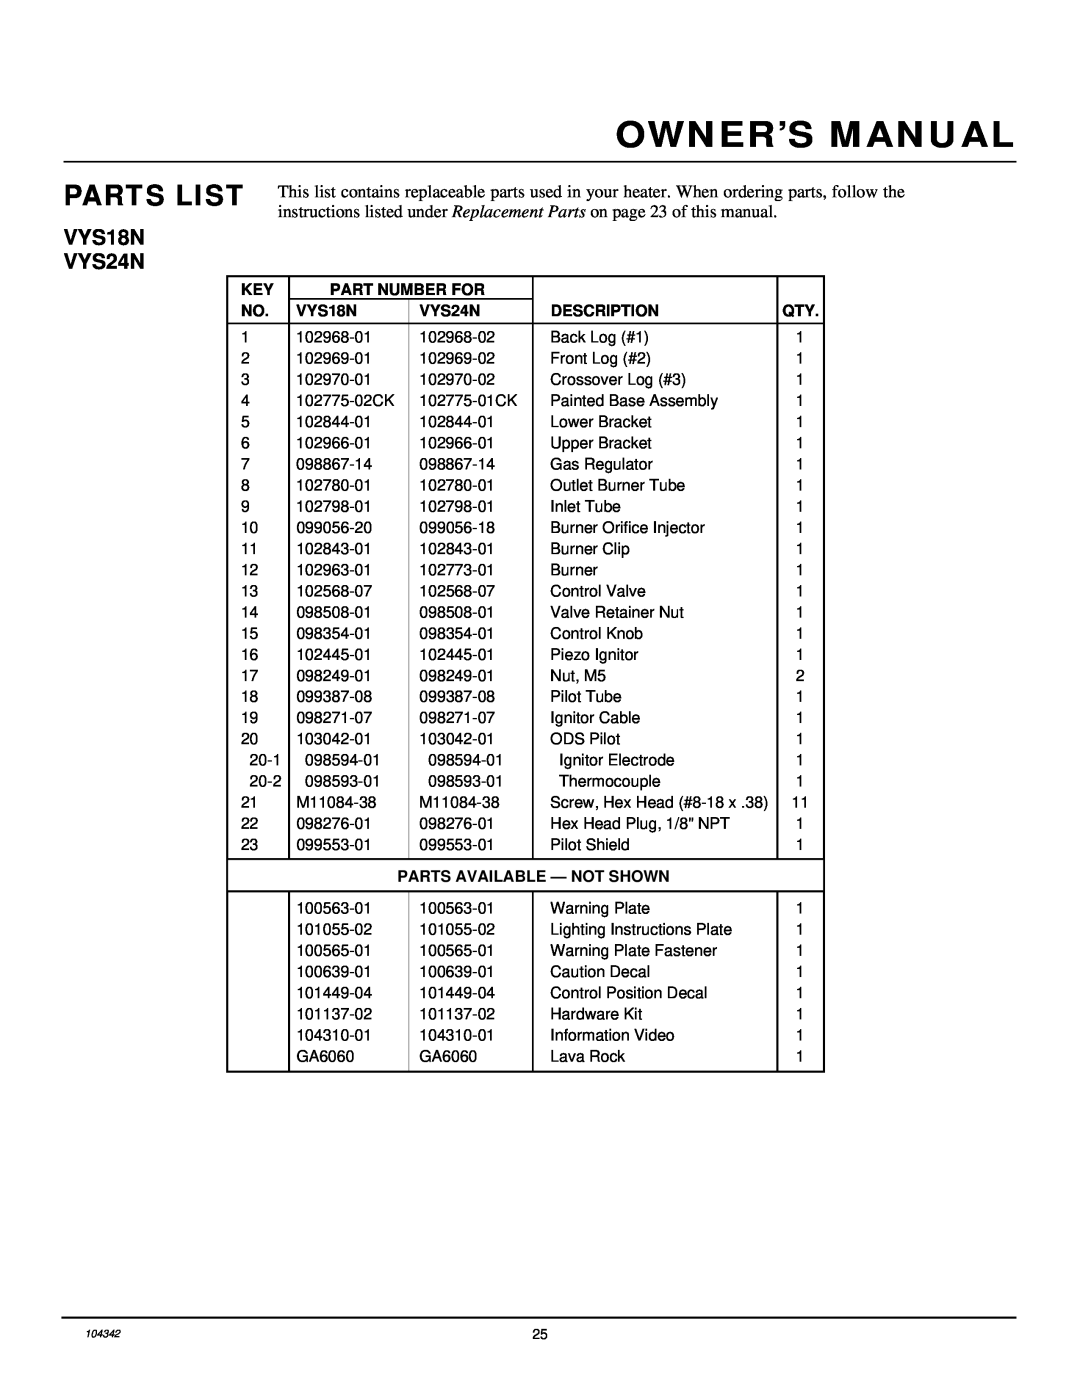 Desa GAS LOG HEATER Parts List, VYS18N VYS24N, Part Number For, Description, Parts Available - Not Shown 